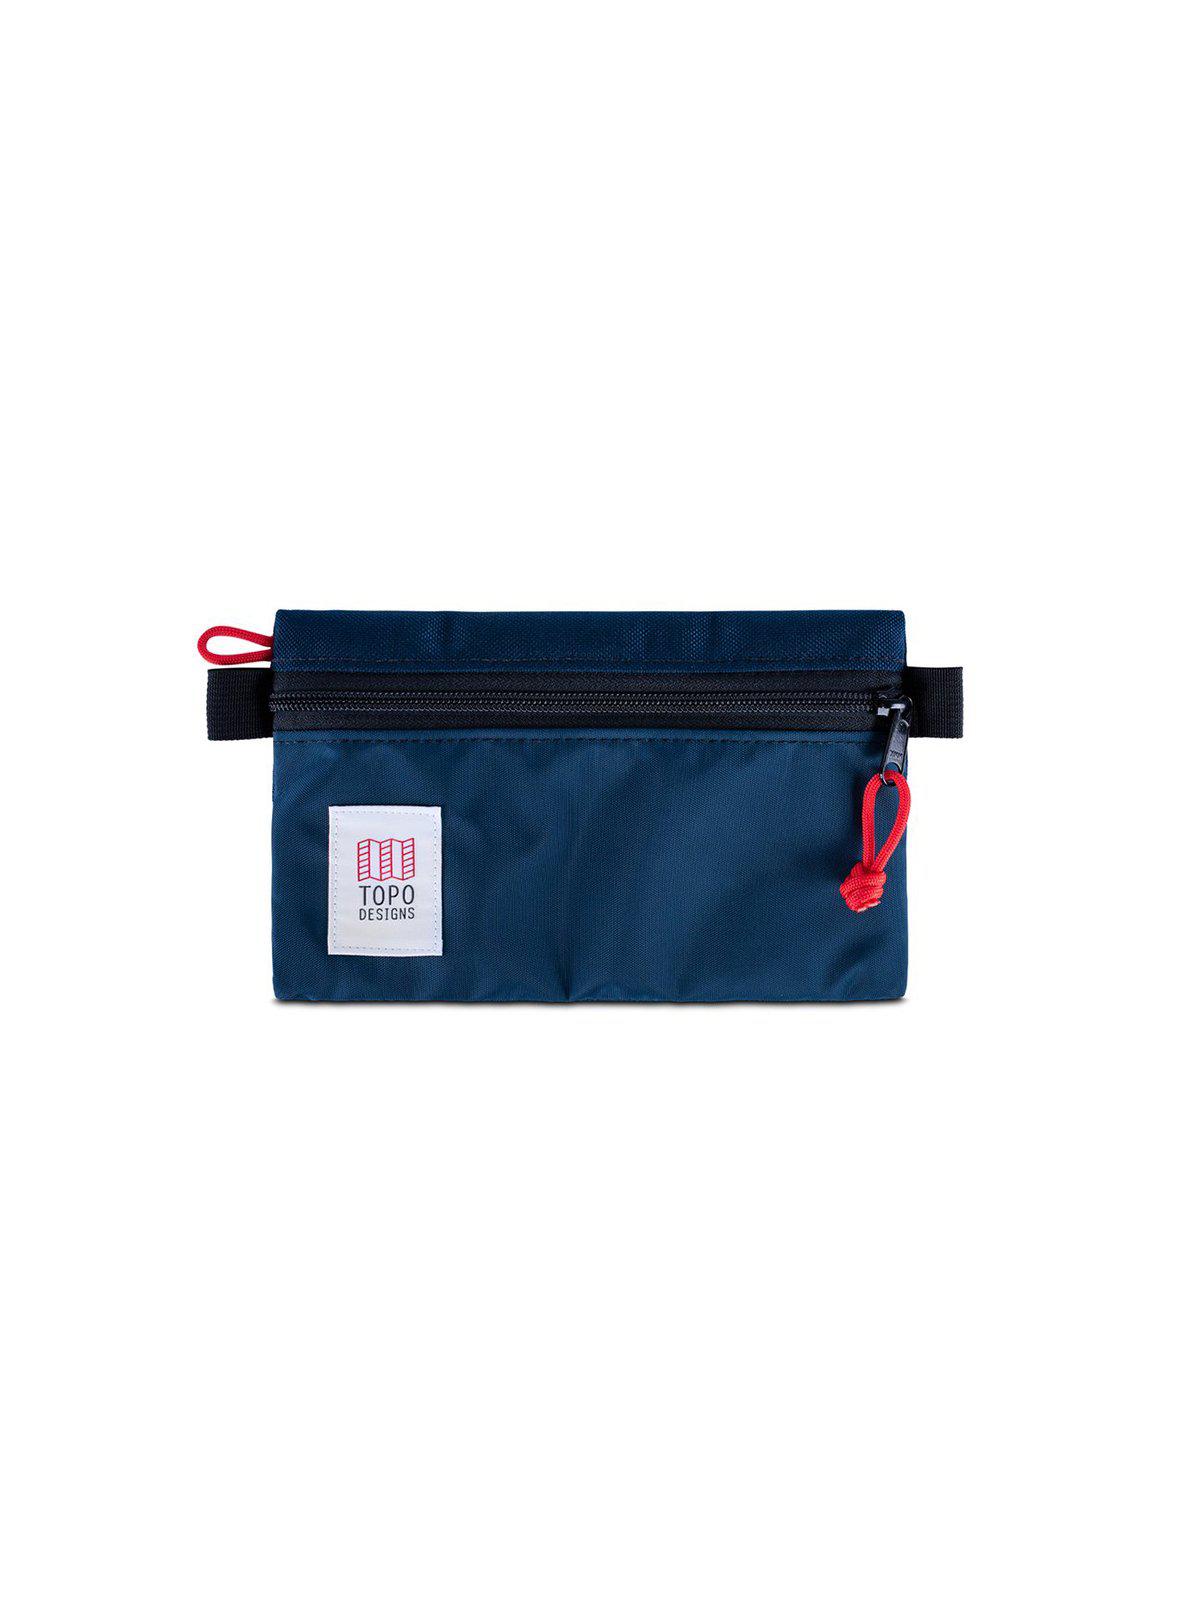 Topo Designs Accessory Bags Navy